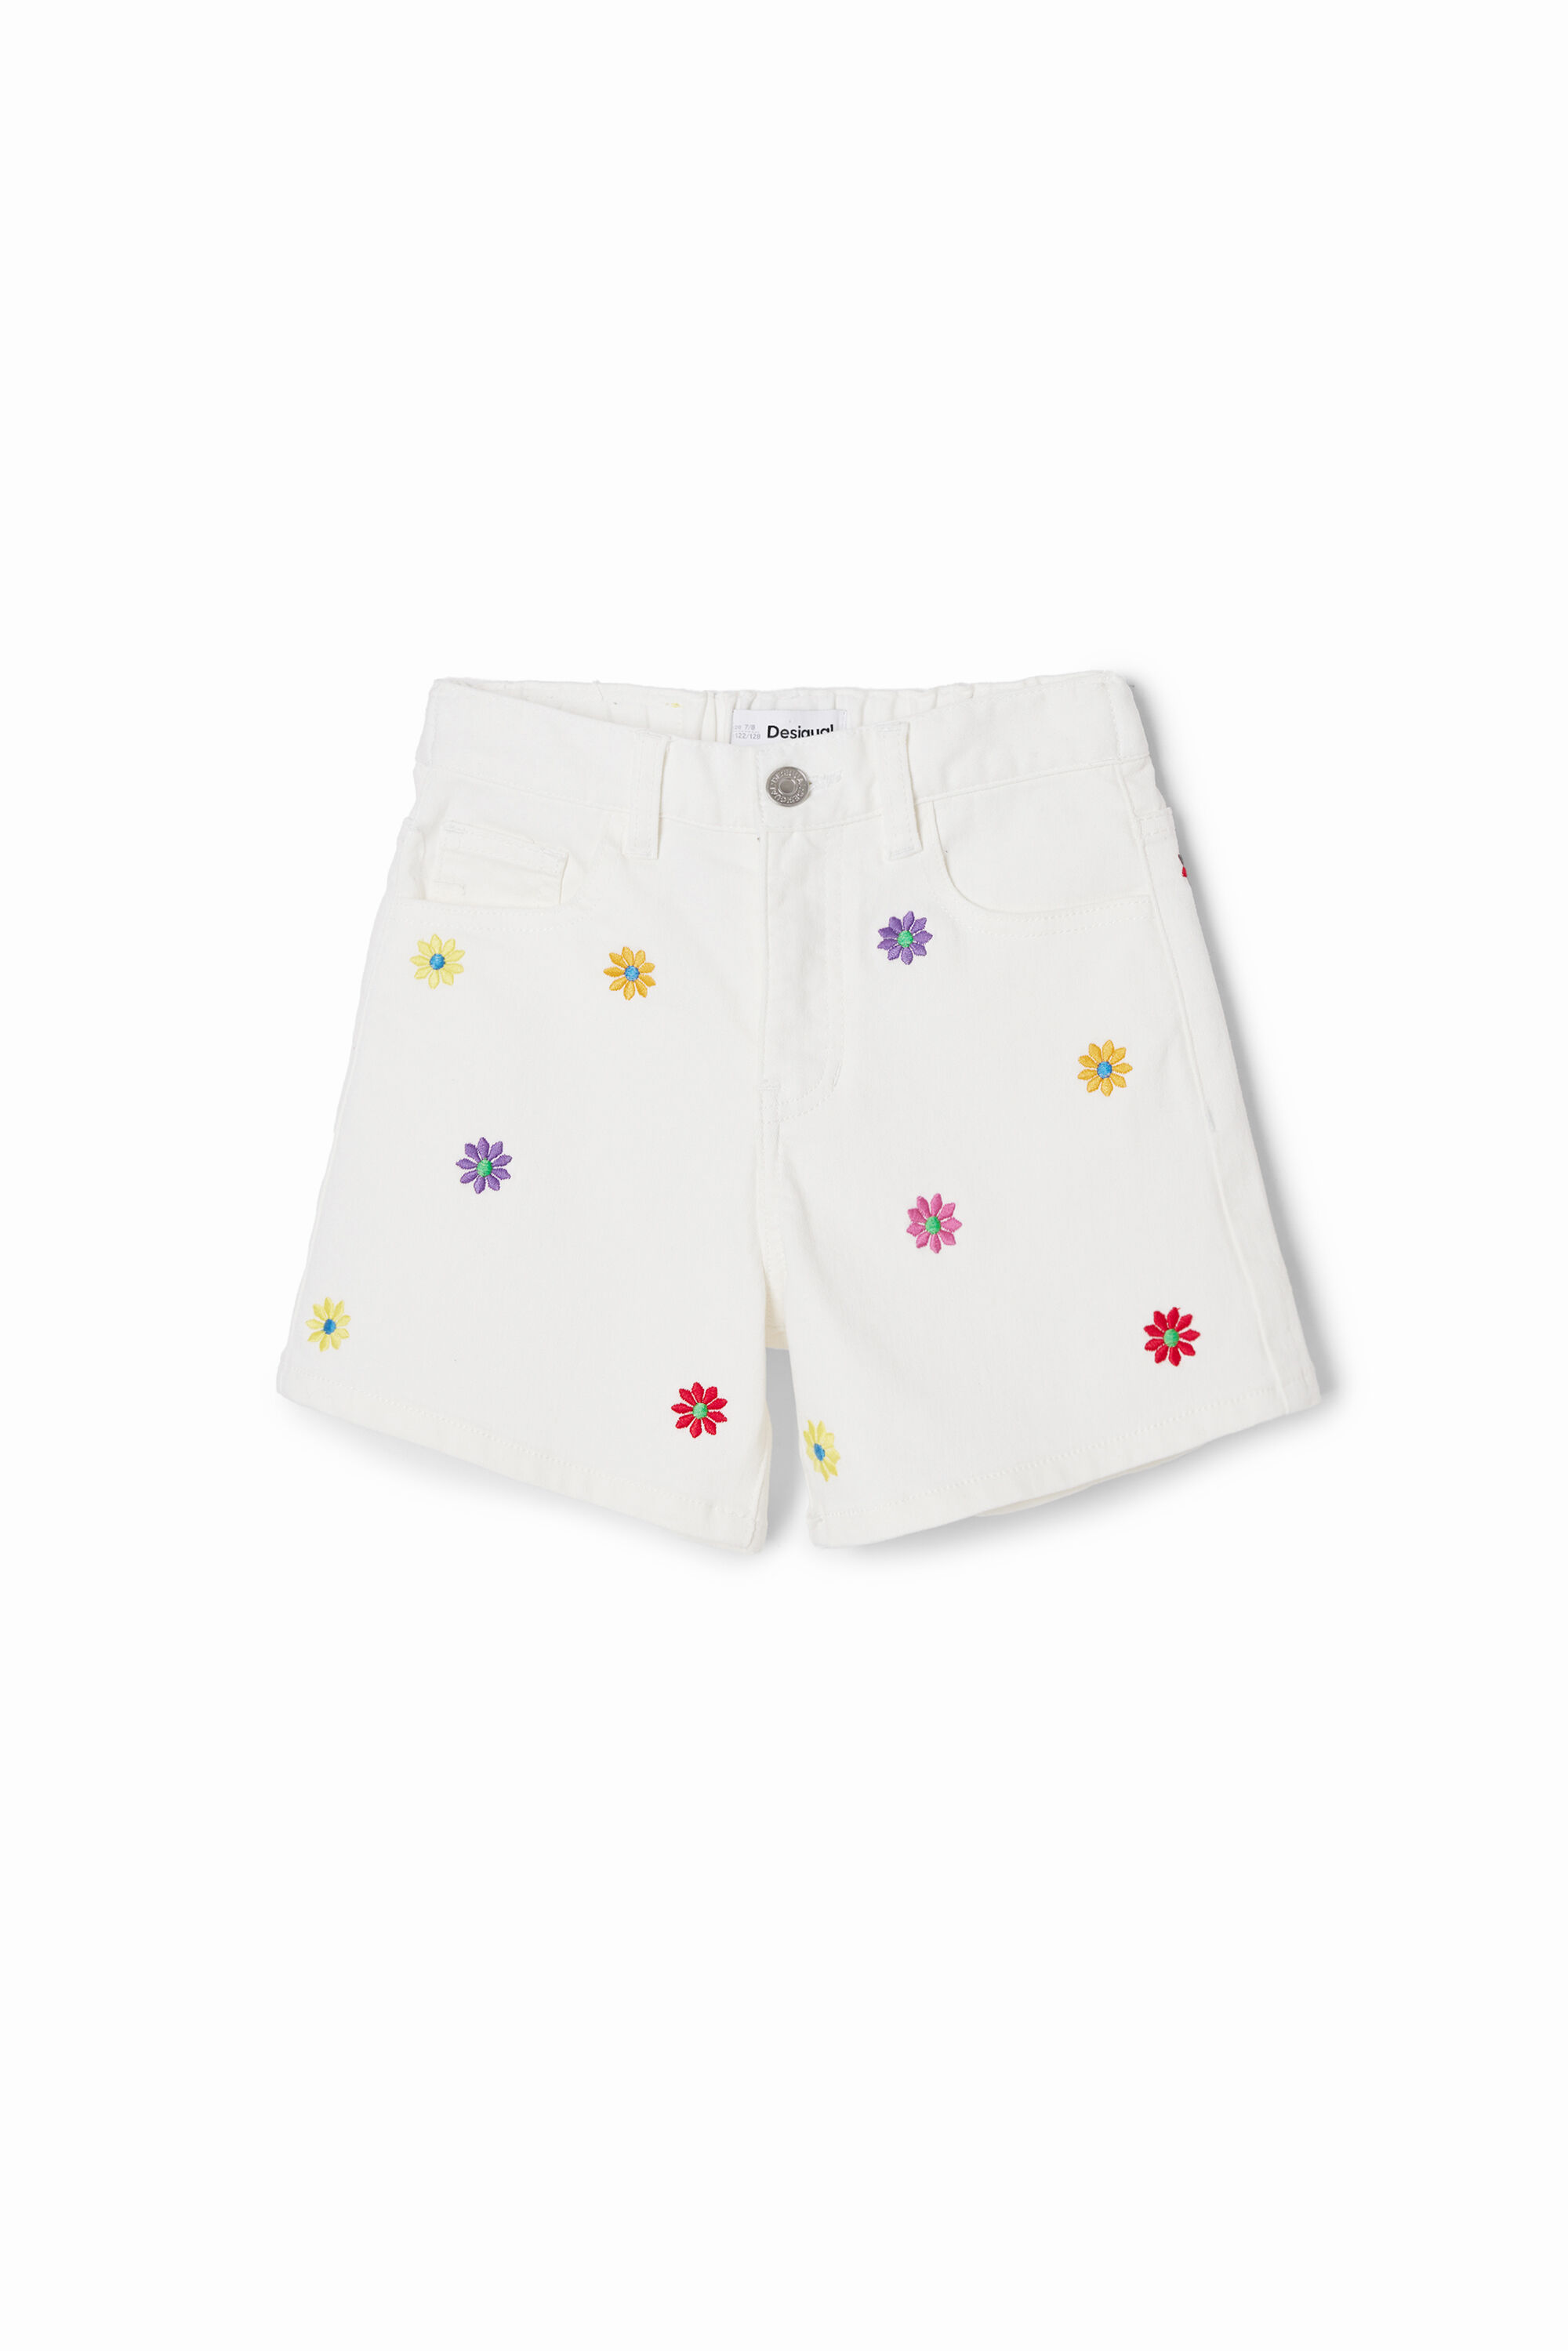 Daisy denim shorts - WHITE - 7/8